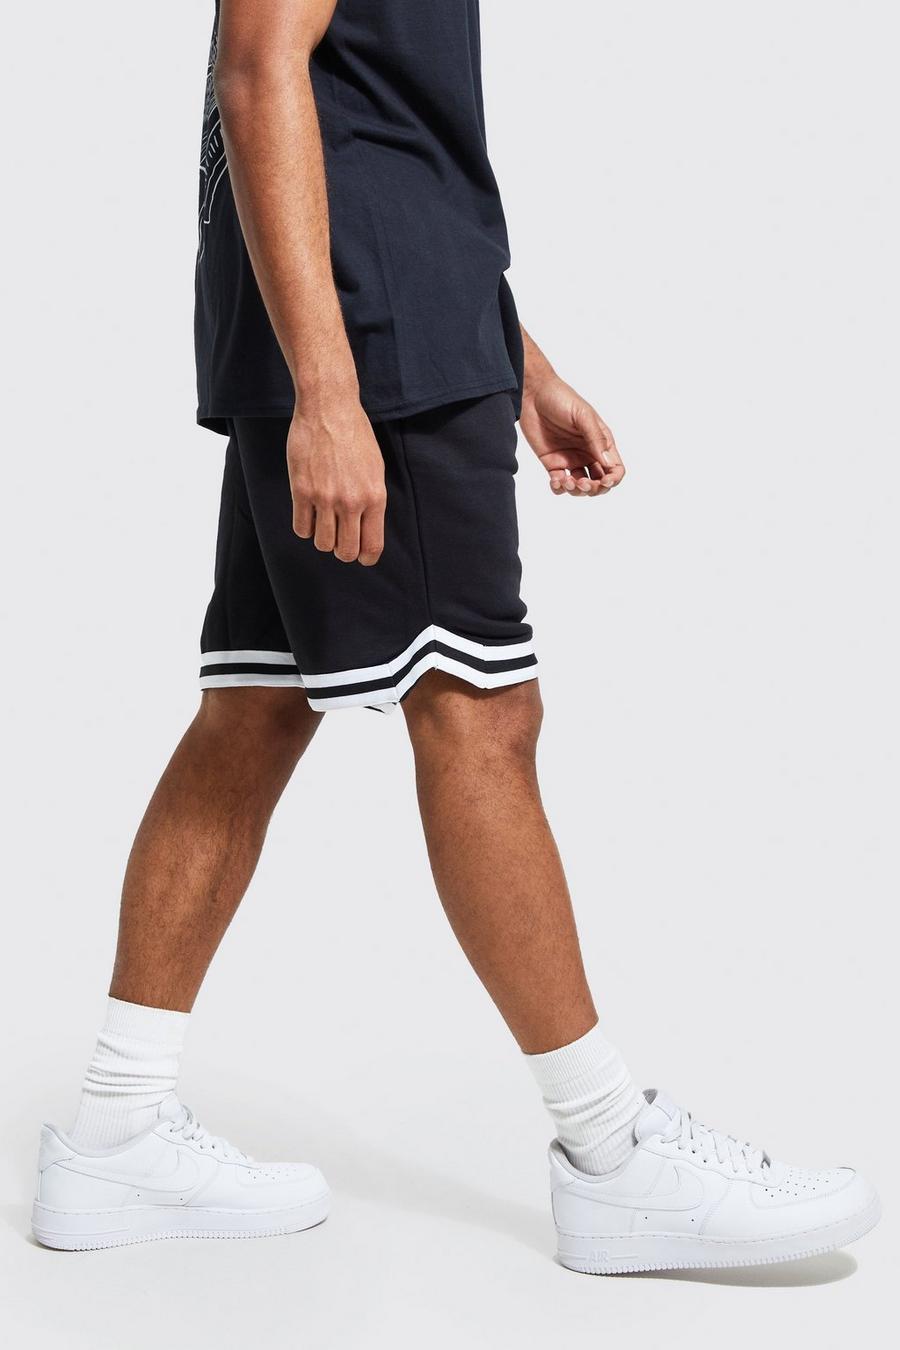 Pantalón corto holgado de baloncesto con algodón ecológico, Black negro